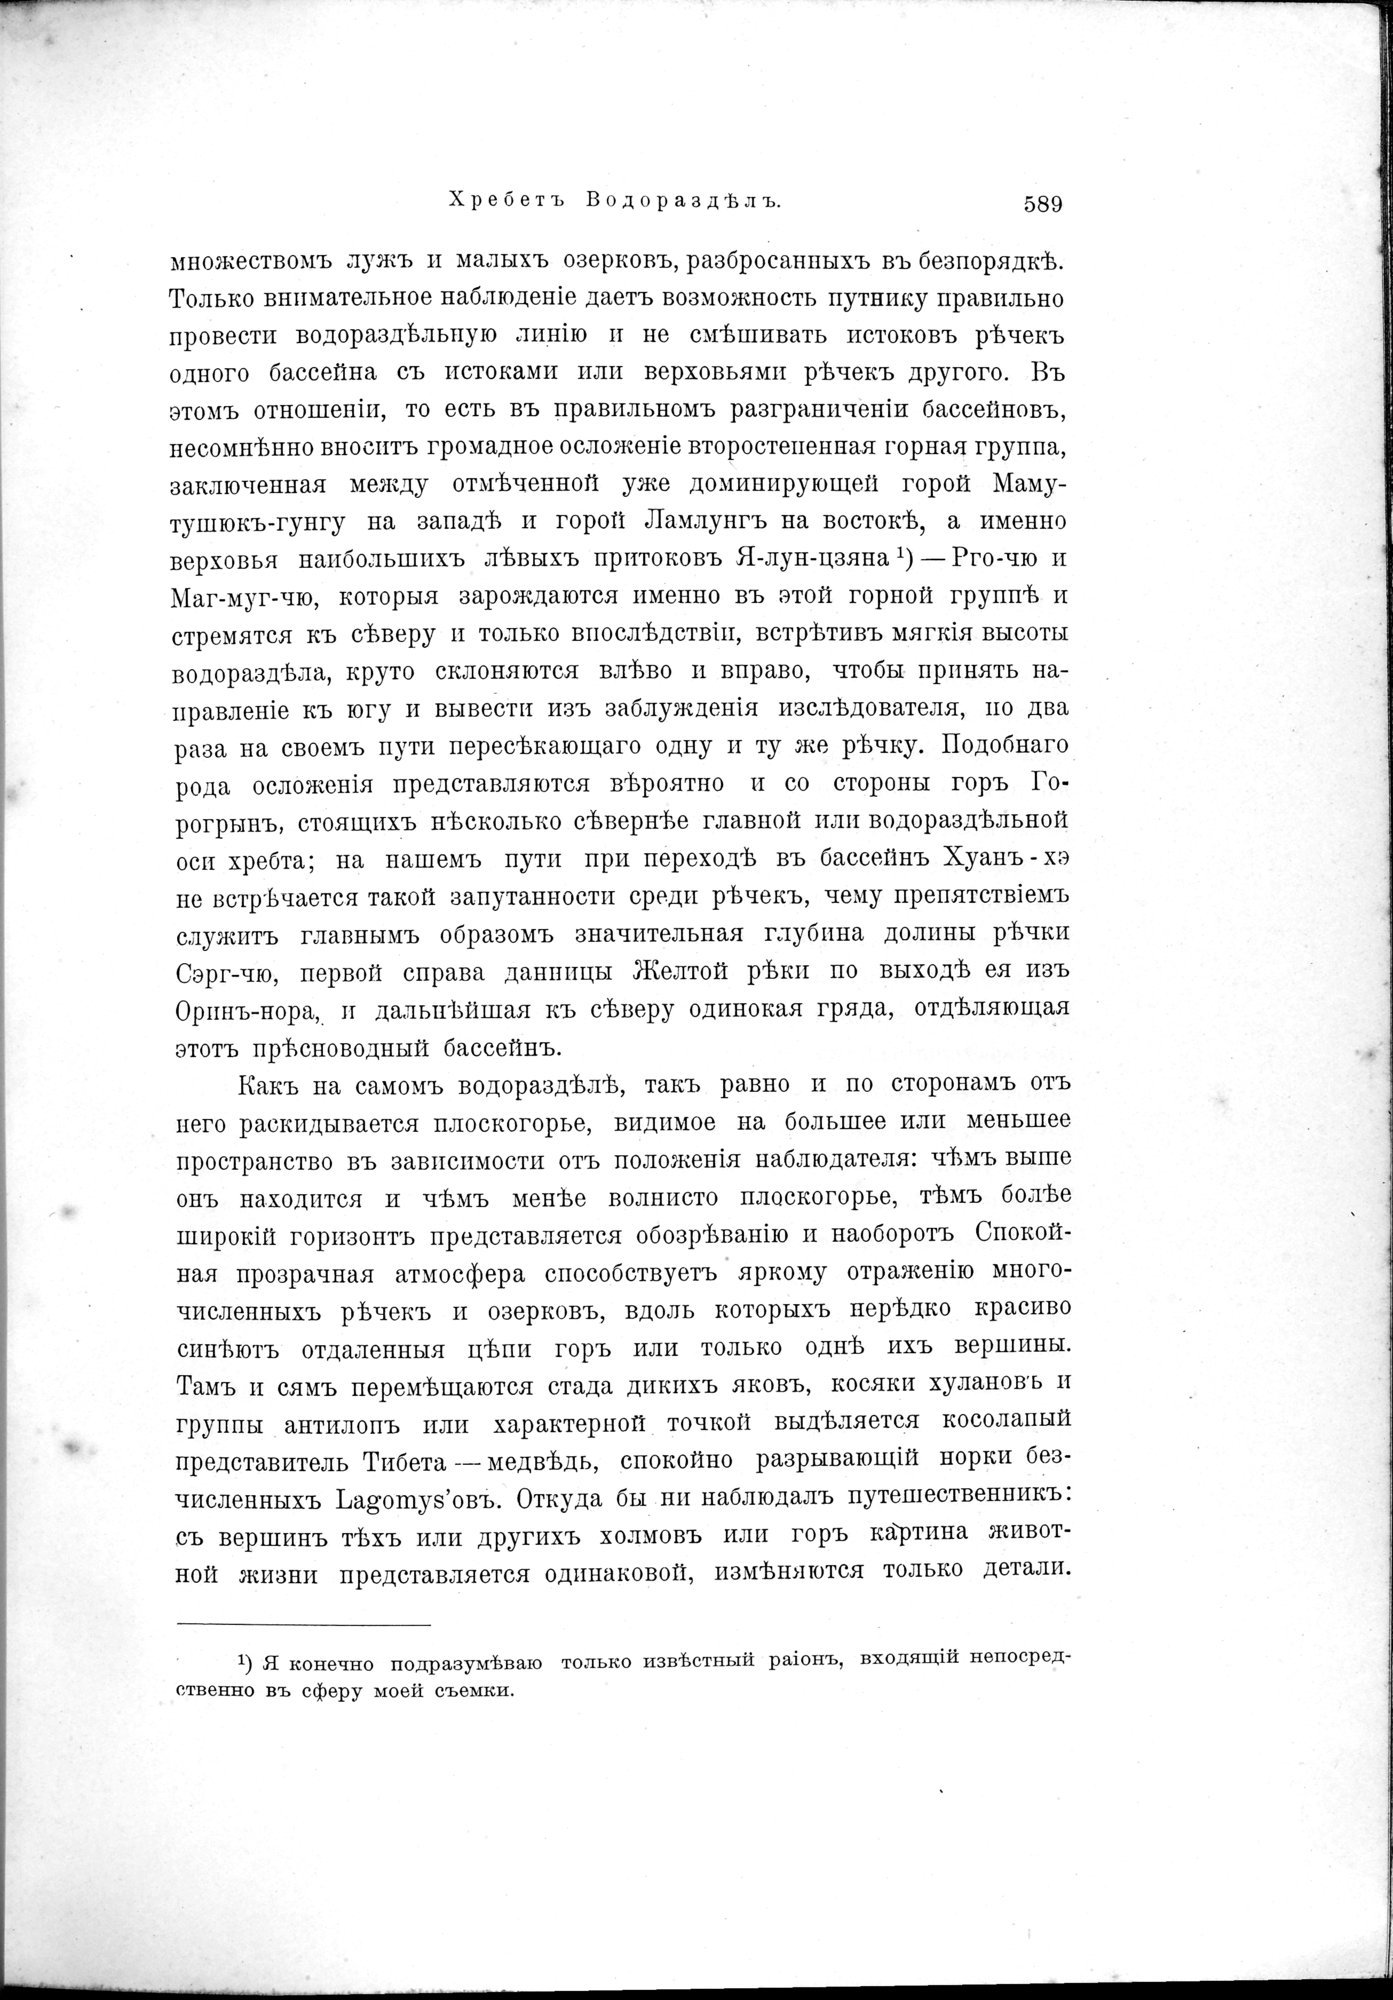 Mongoliia i Kam : vol.2 / Page 415 (Grayscale High Resolution Image)